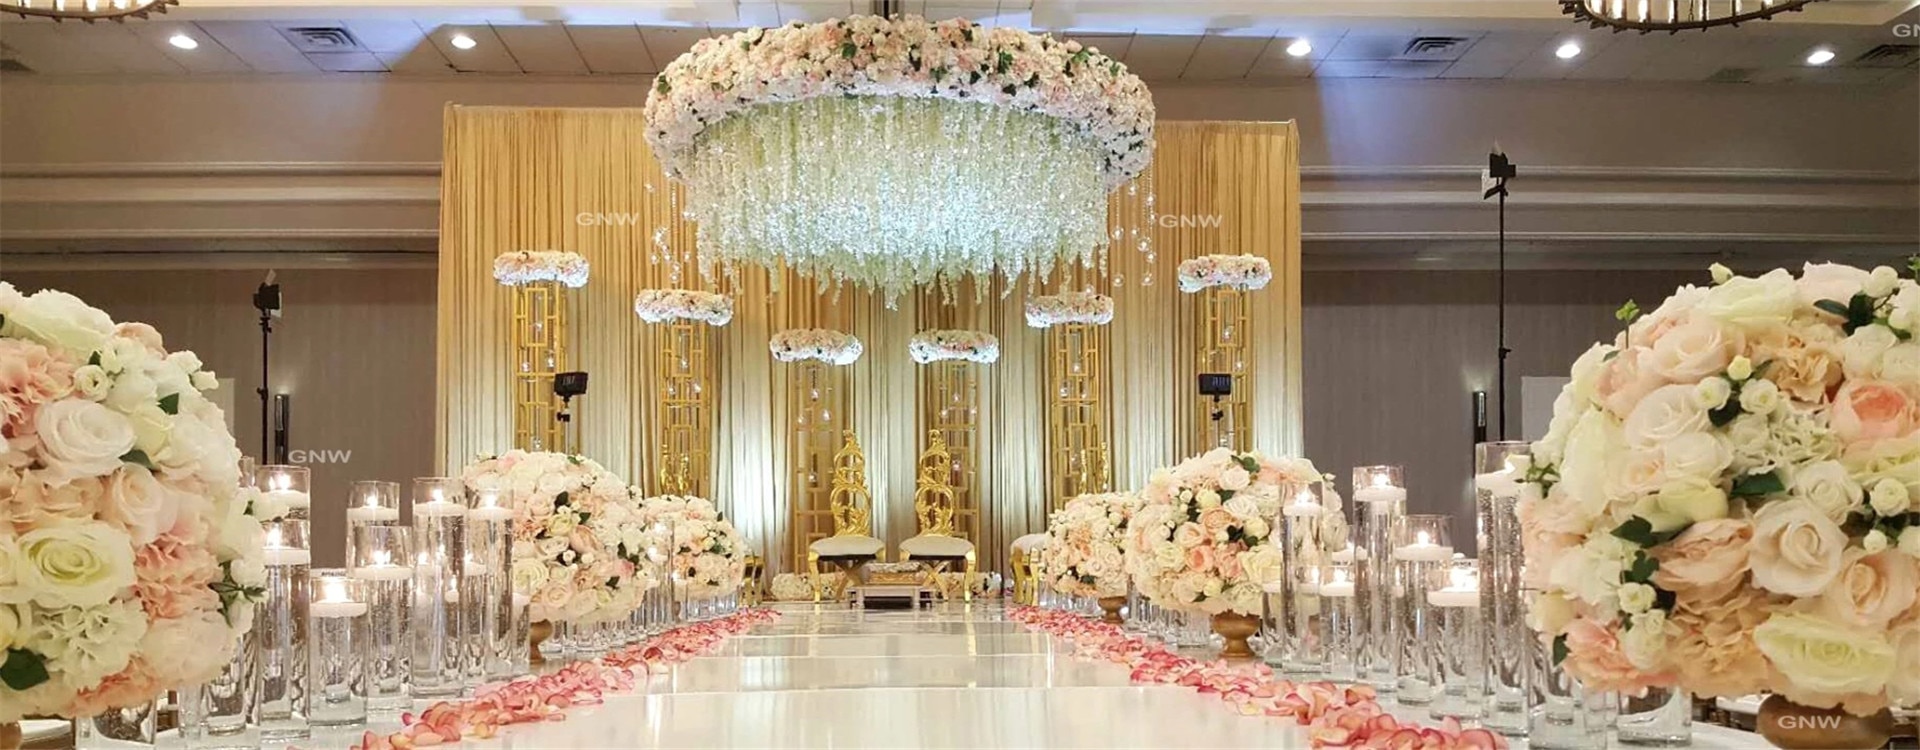 fake flowers decor for weddings